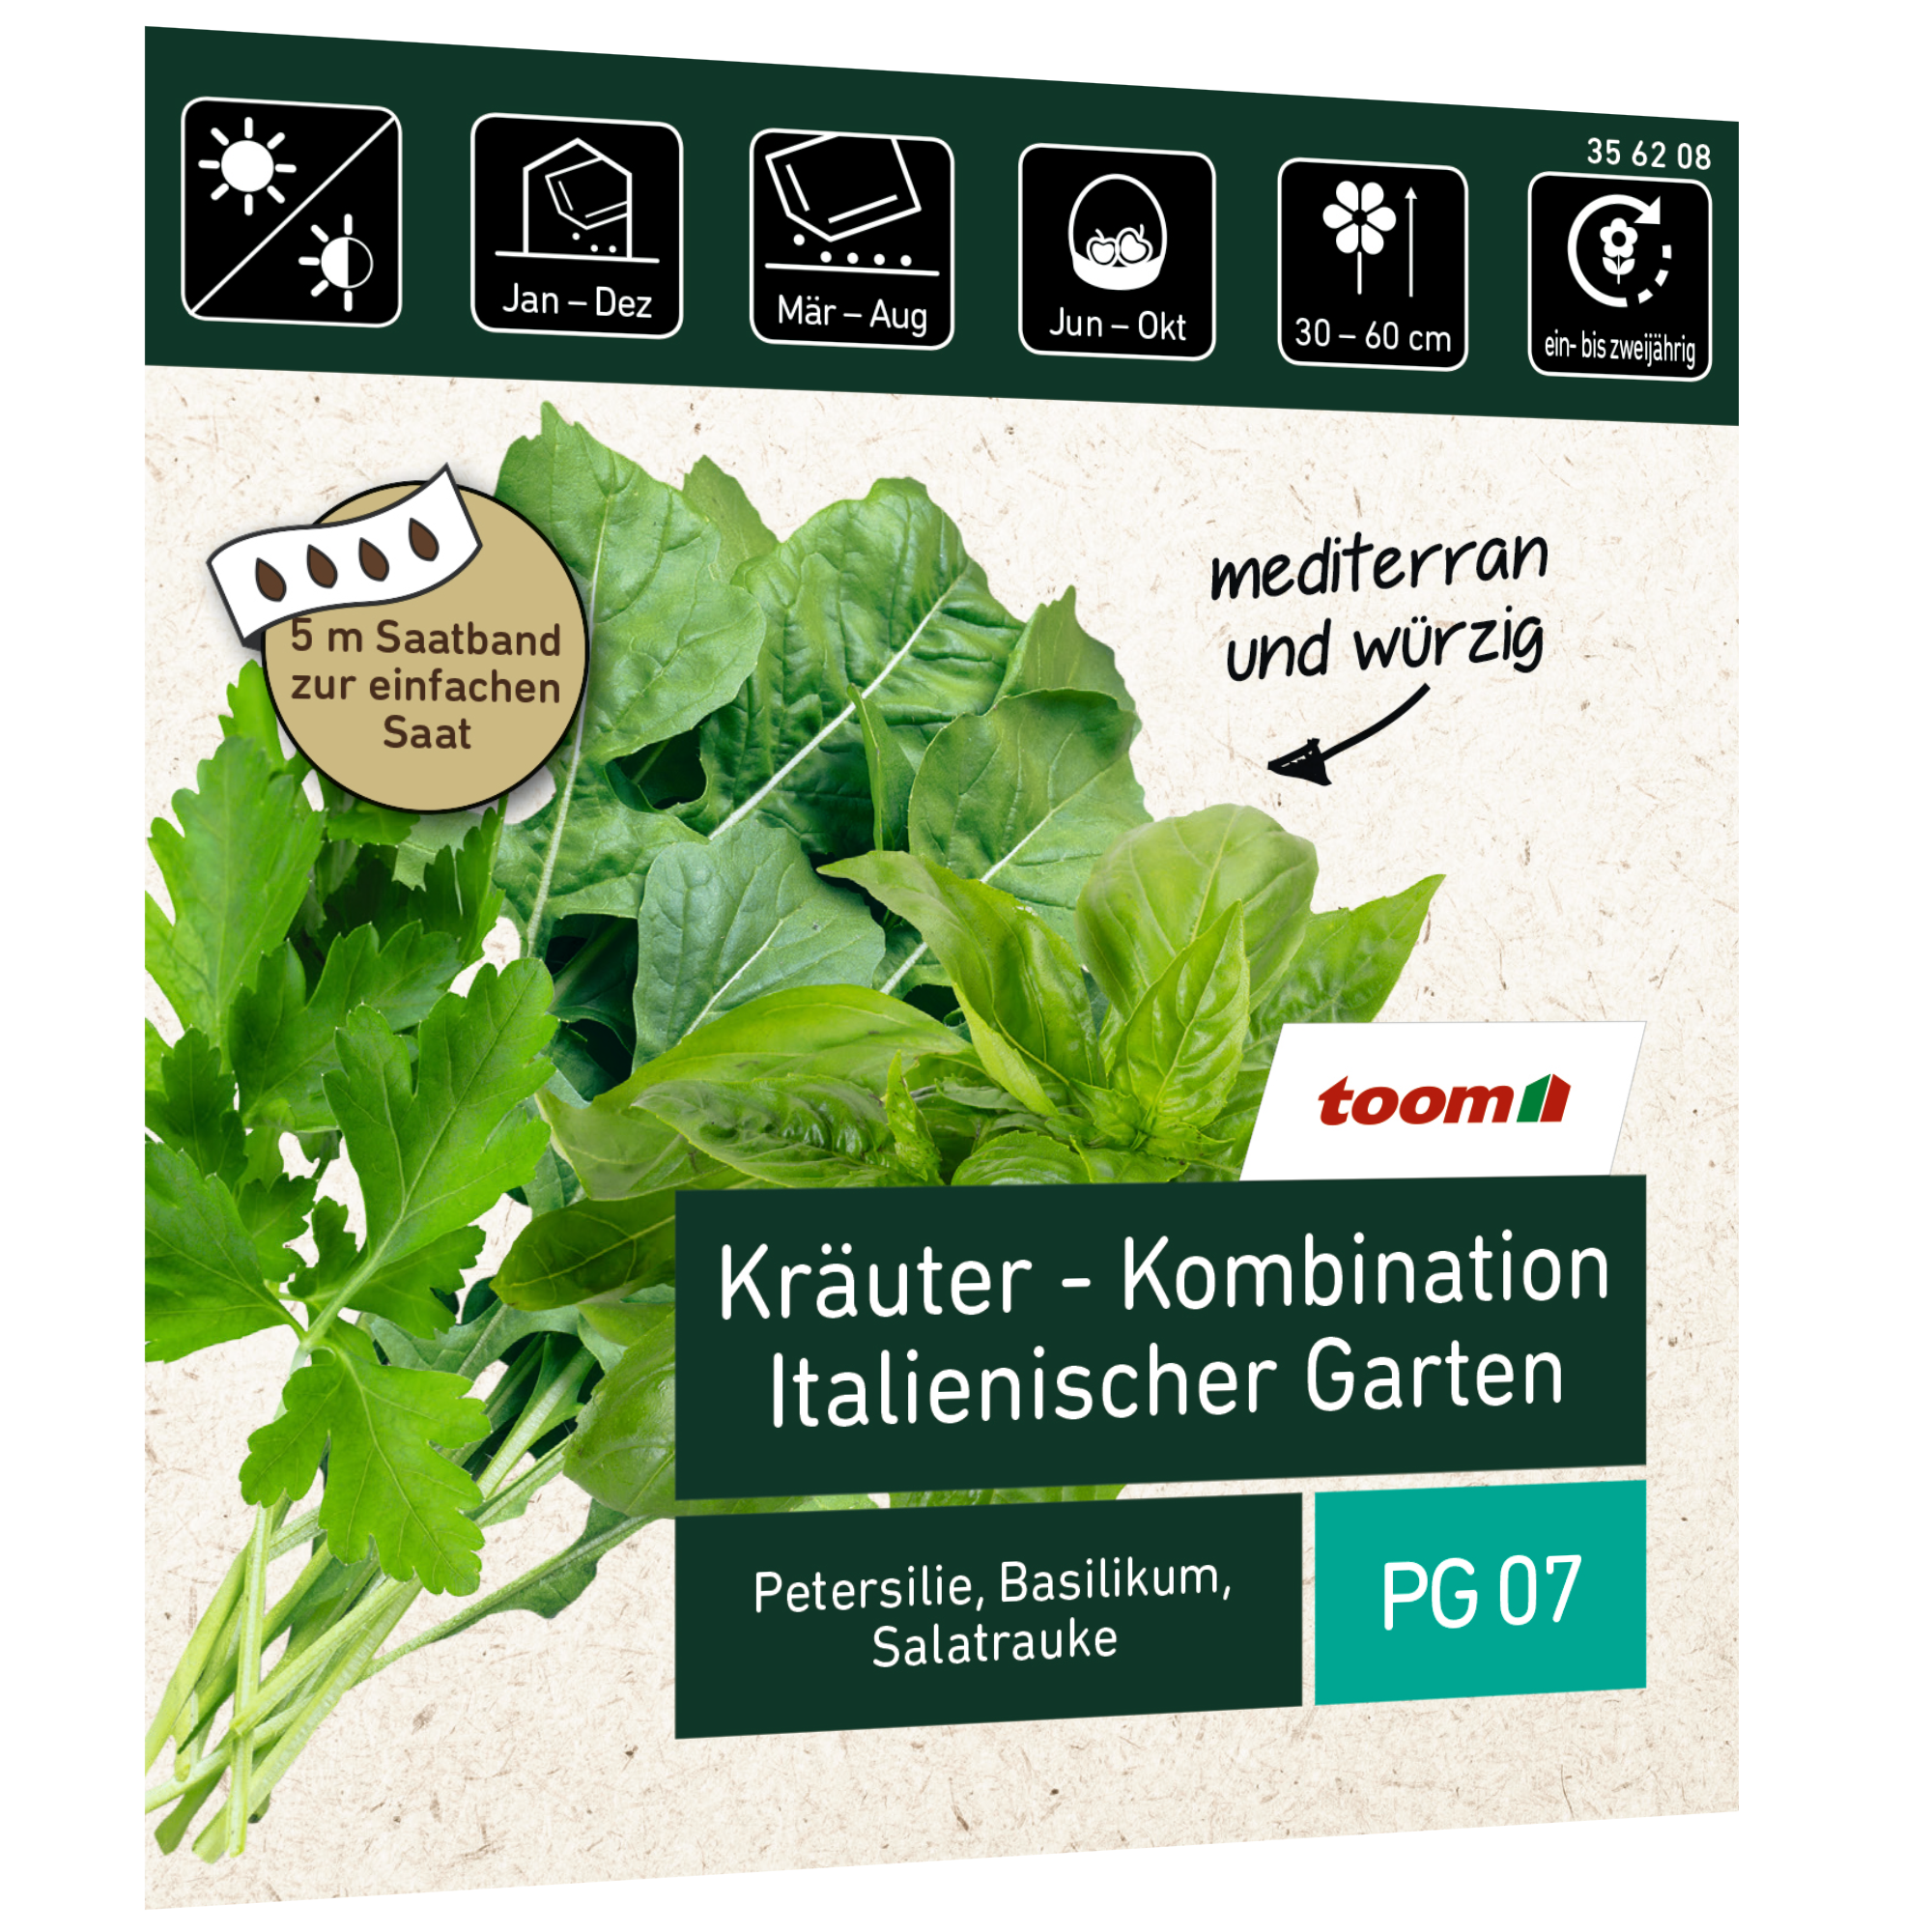 Kräuter 'Italienischer Garten' Saatband 5 m + product picture